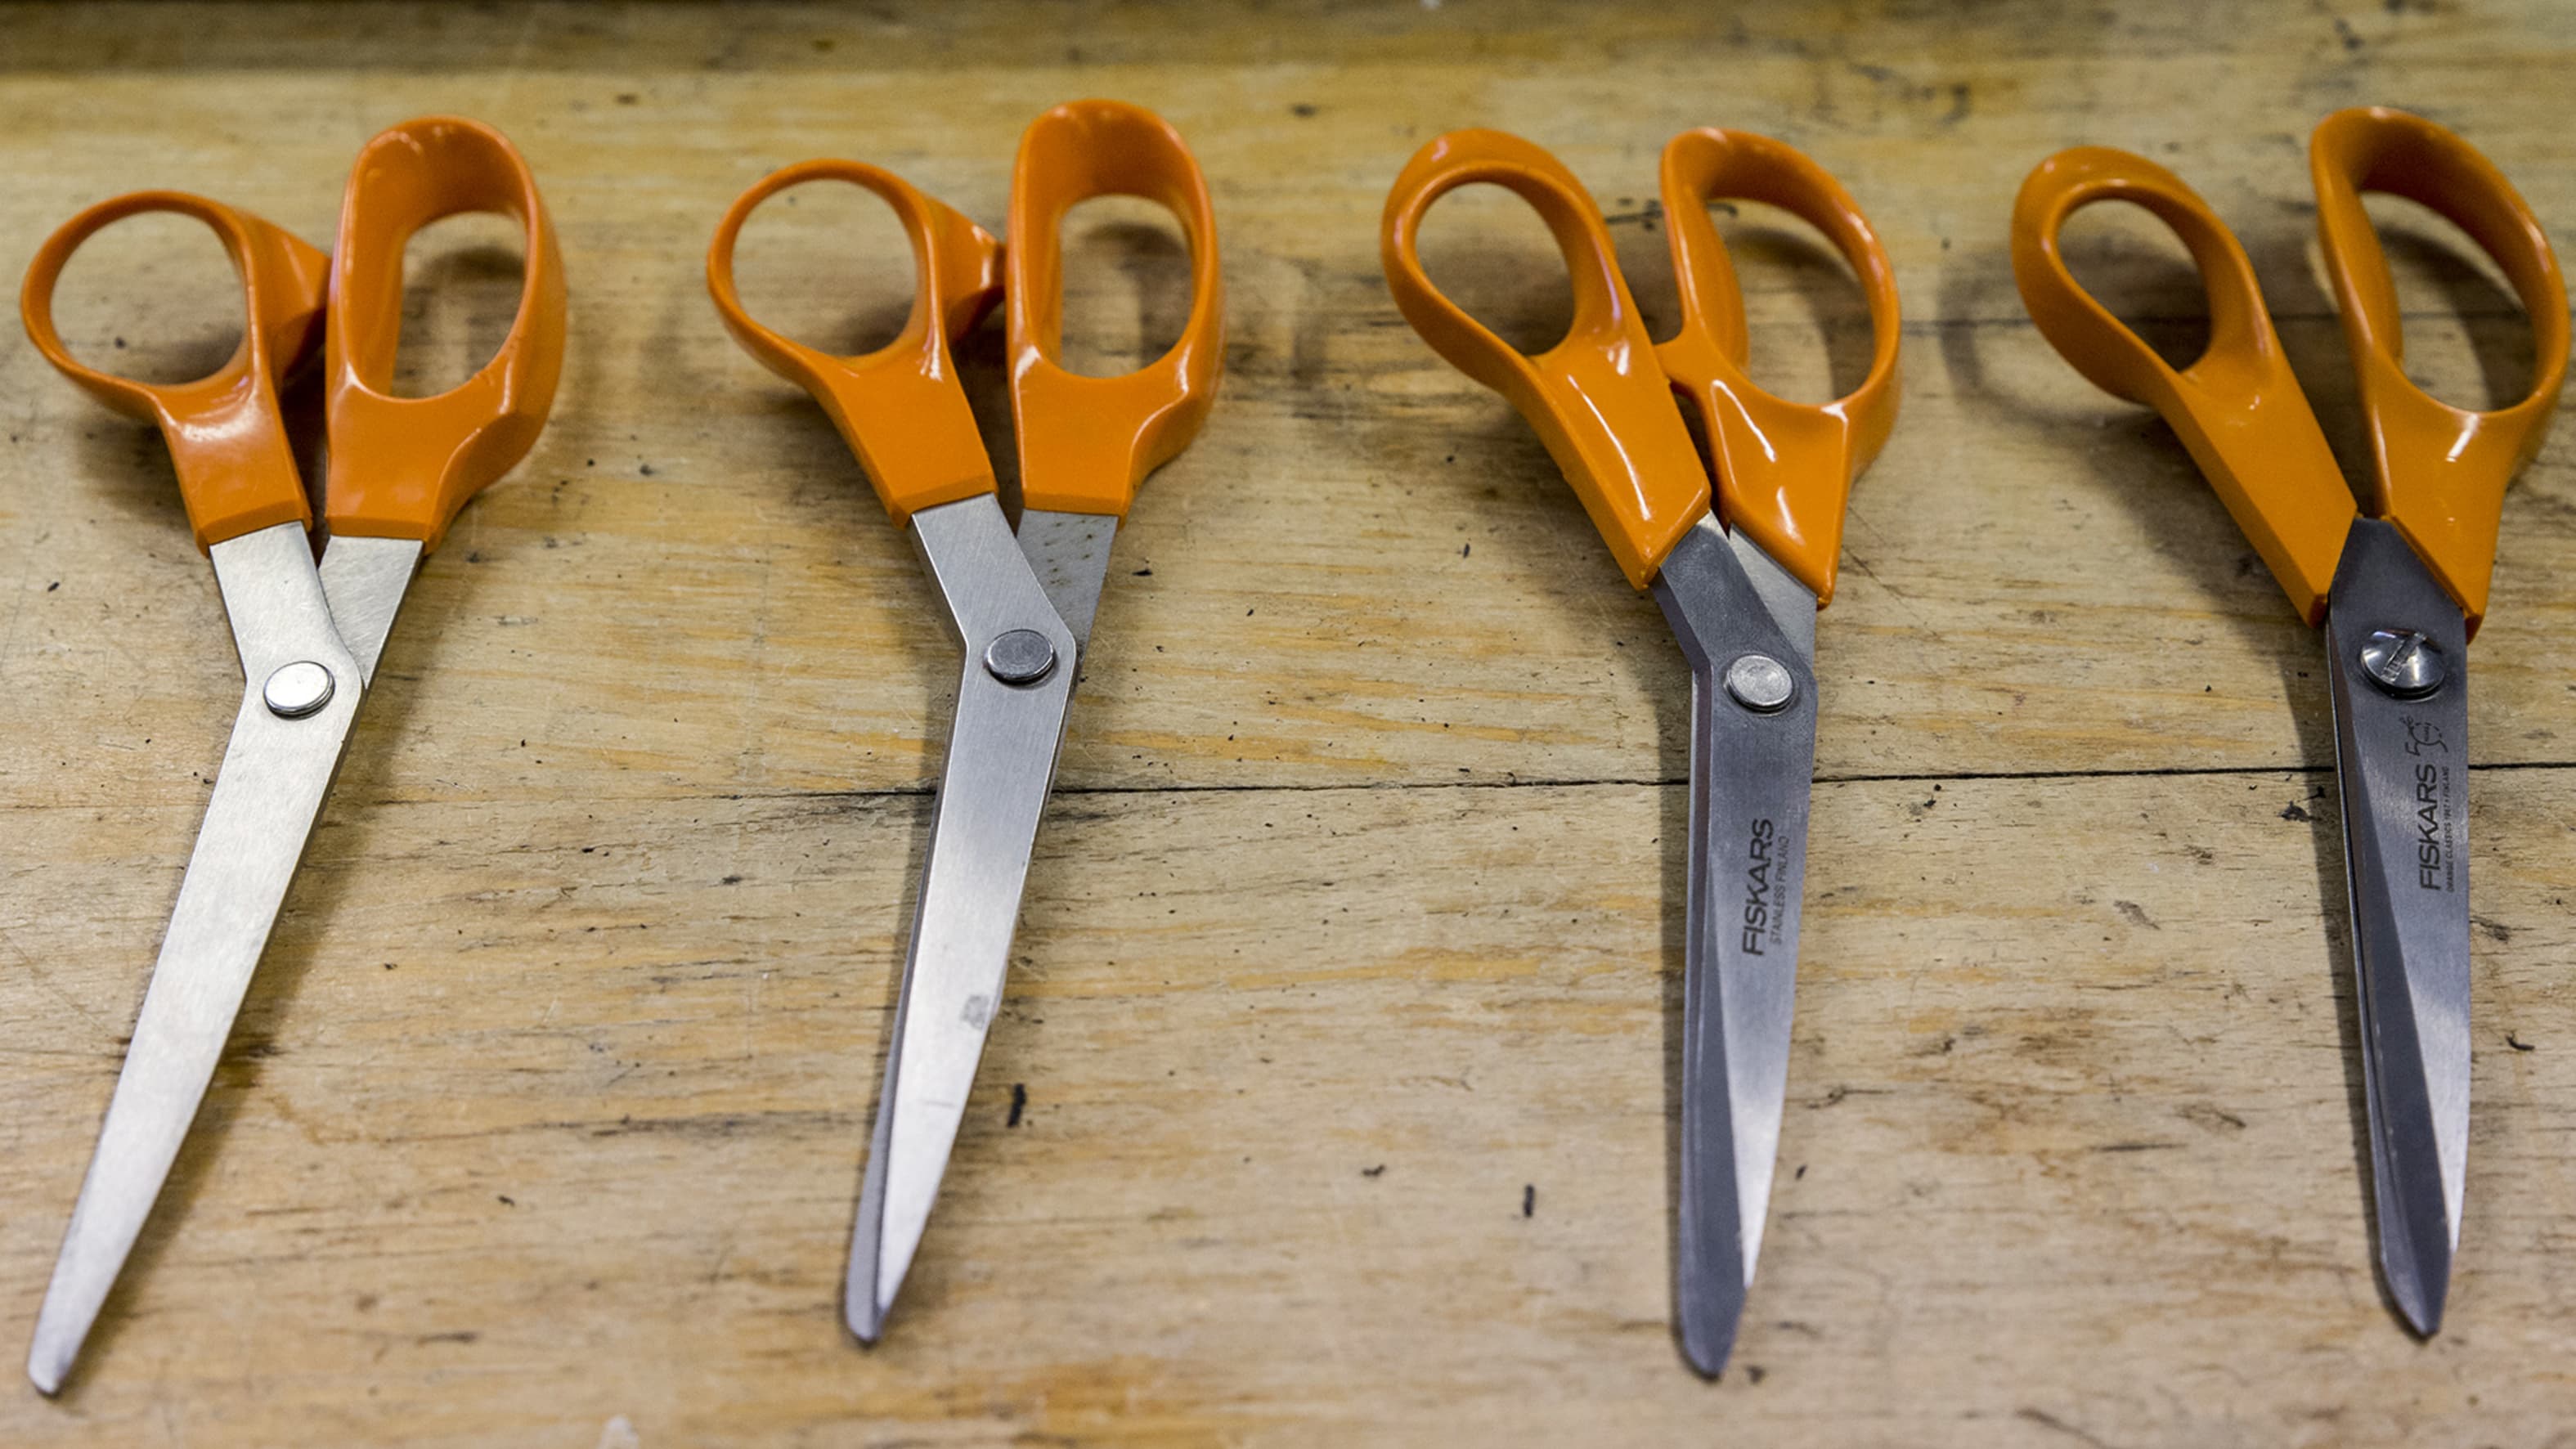 History of Iconic Fiskars Orange Scissors